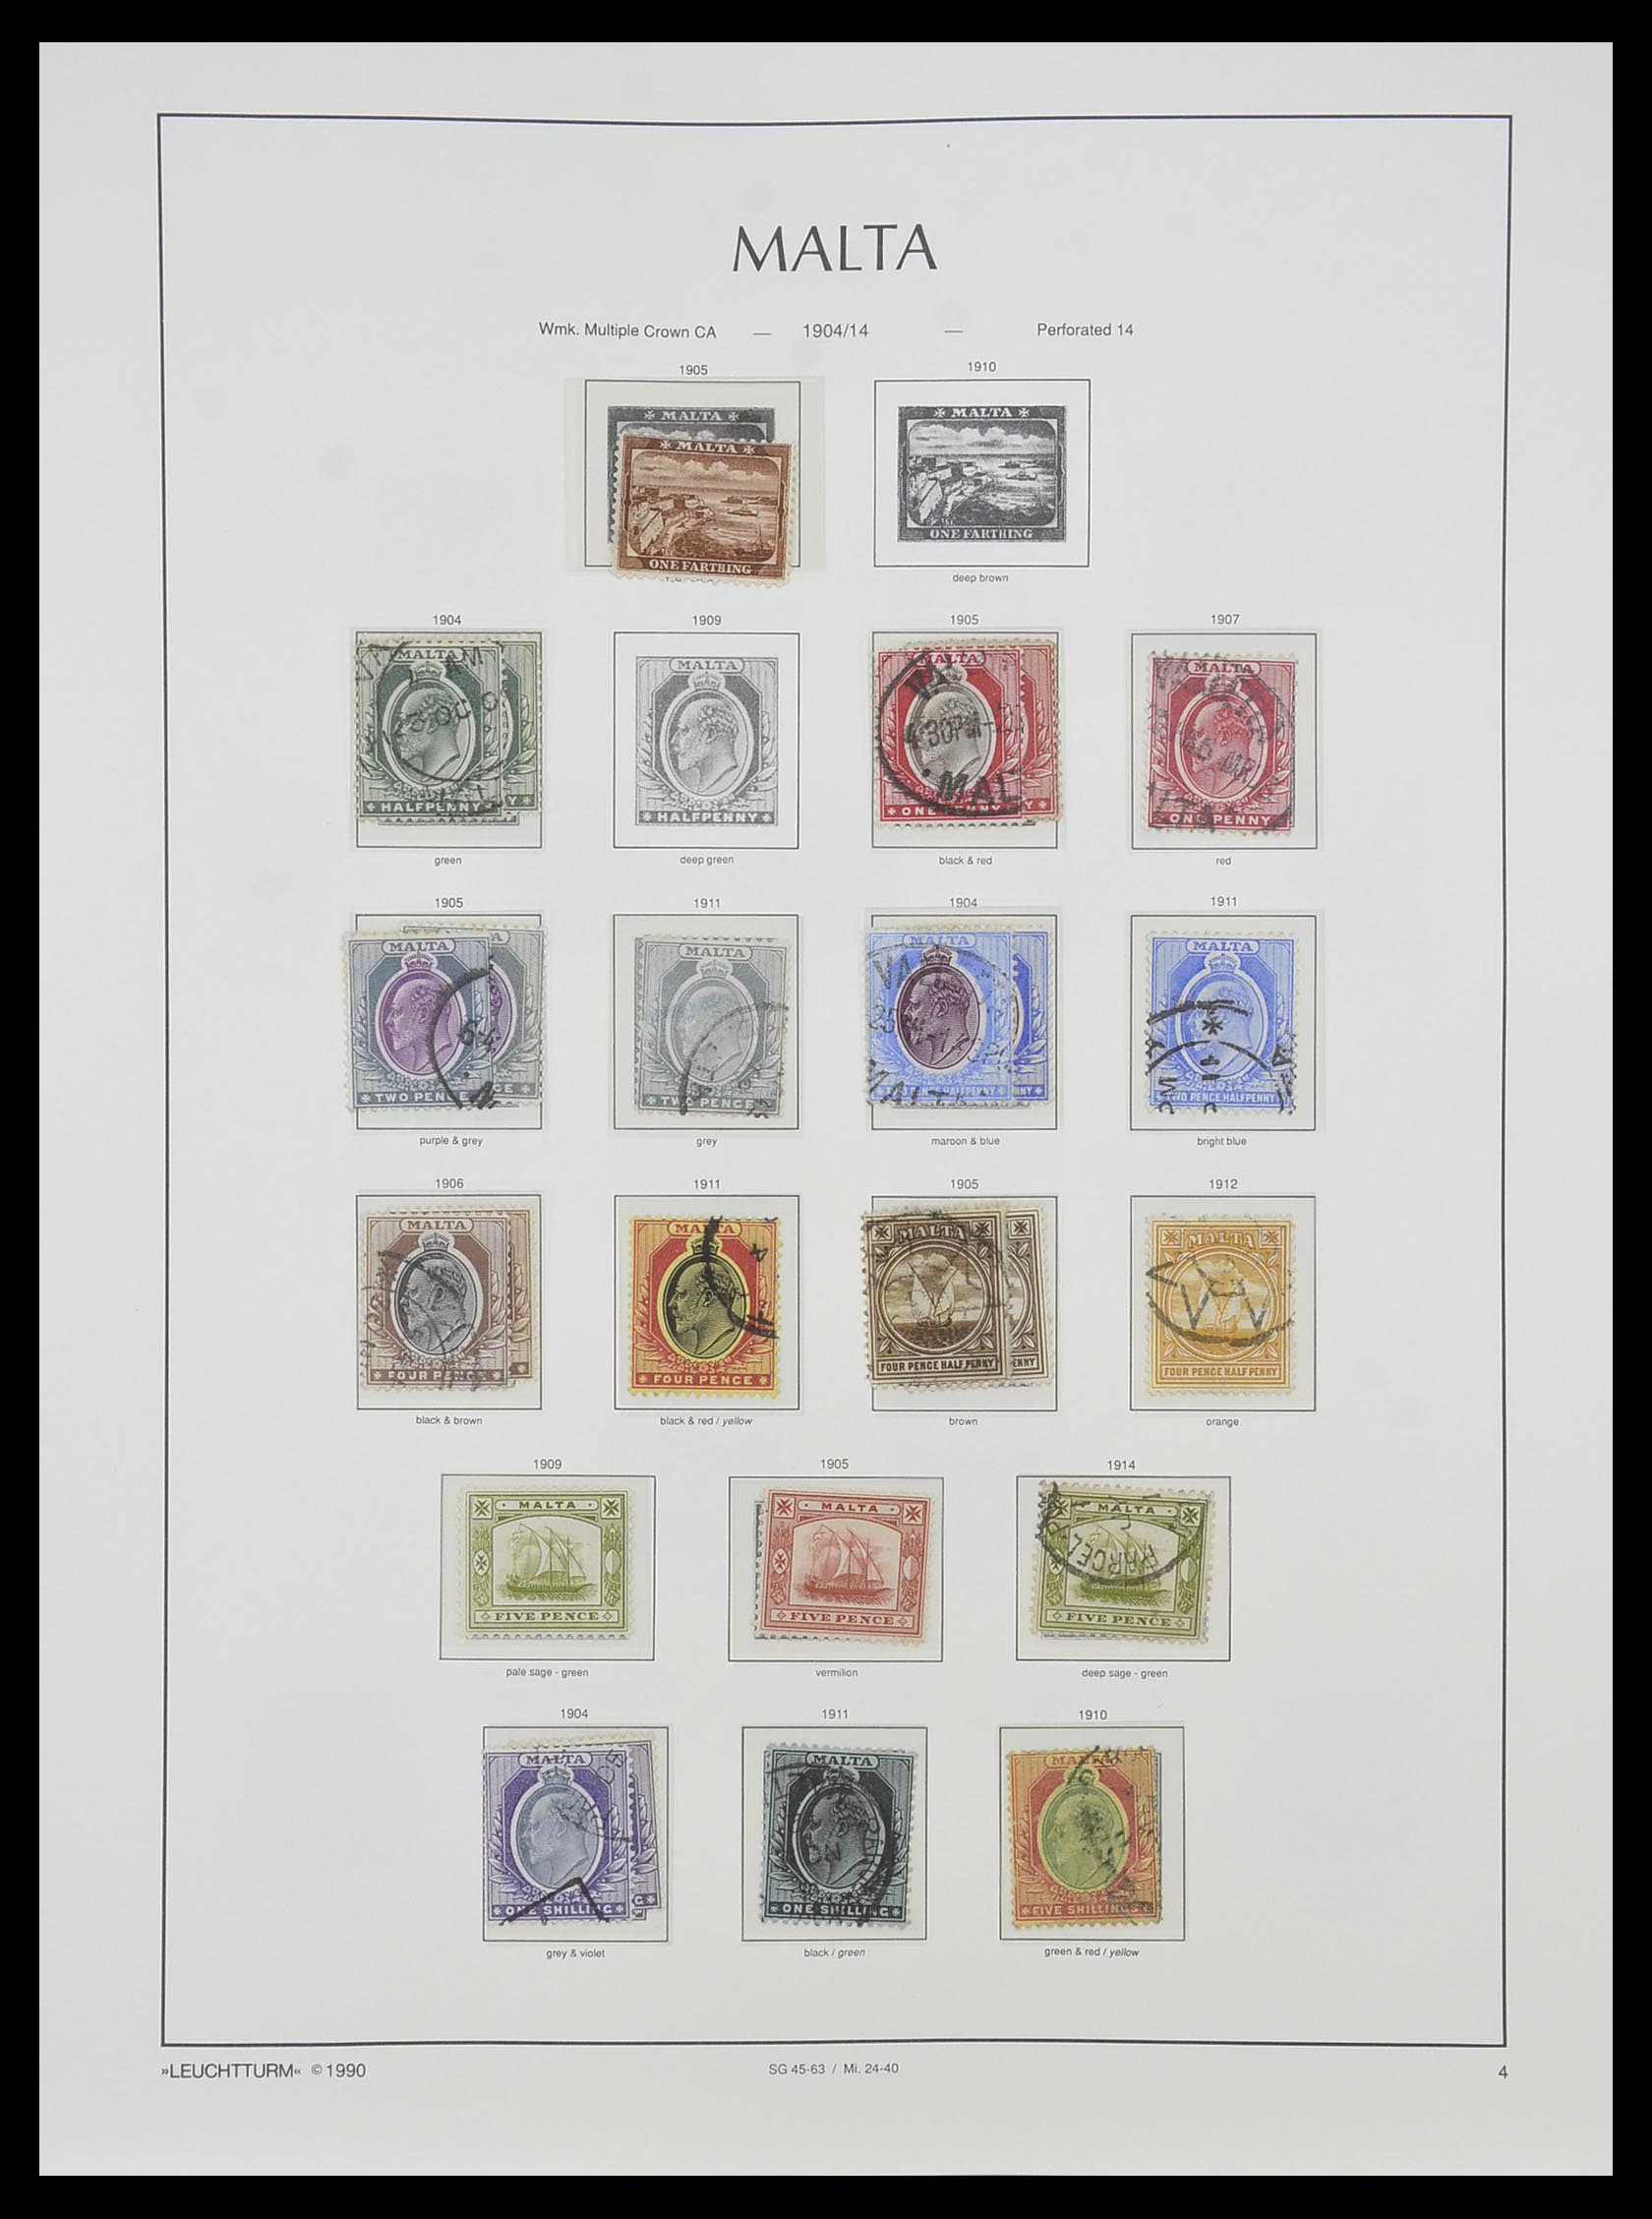 33968 004 - Stamp collection 33968 Malta 1861-2001.